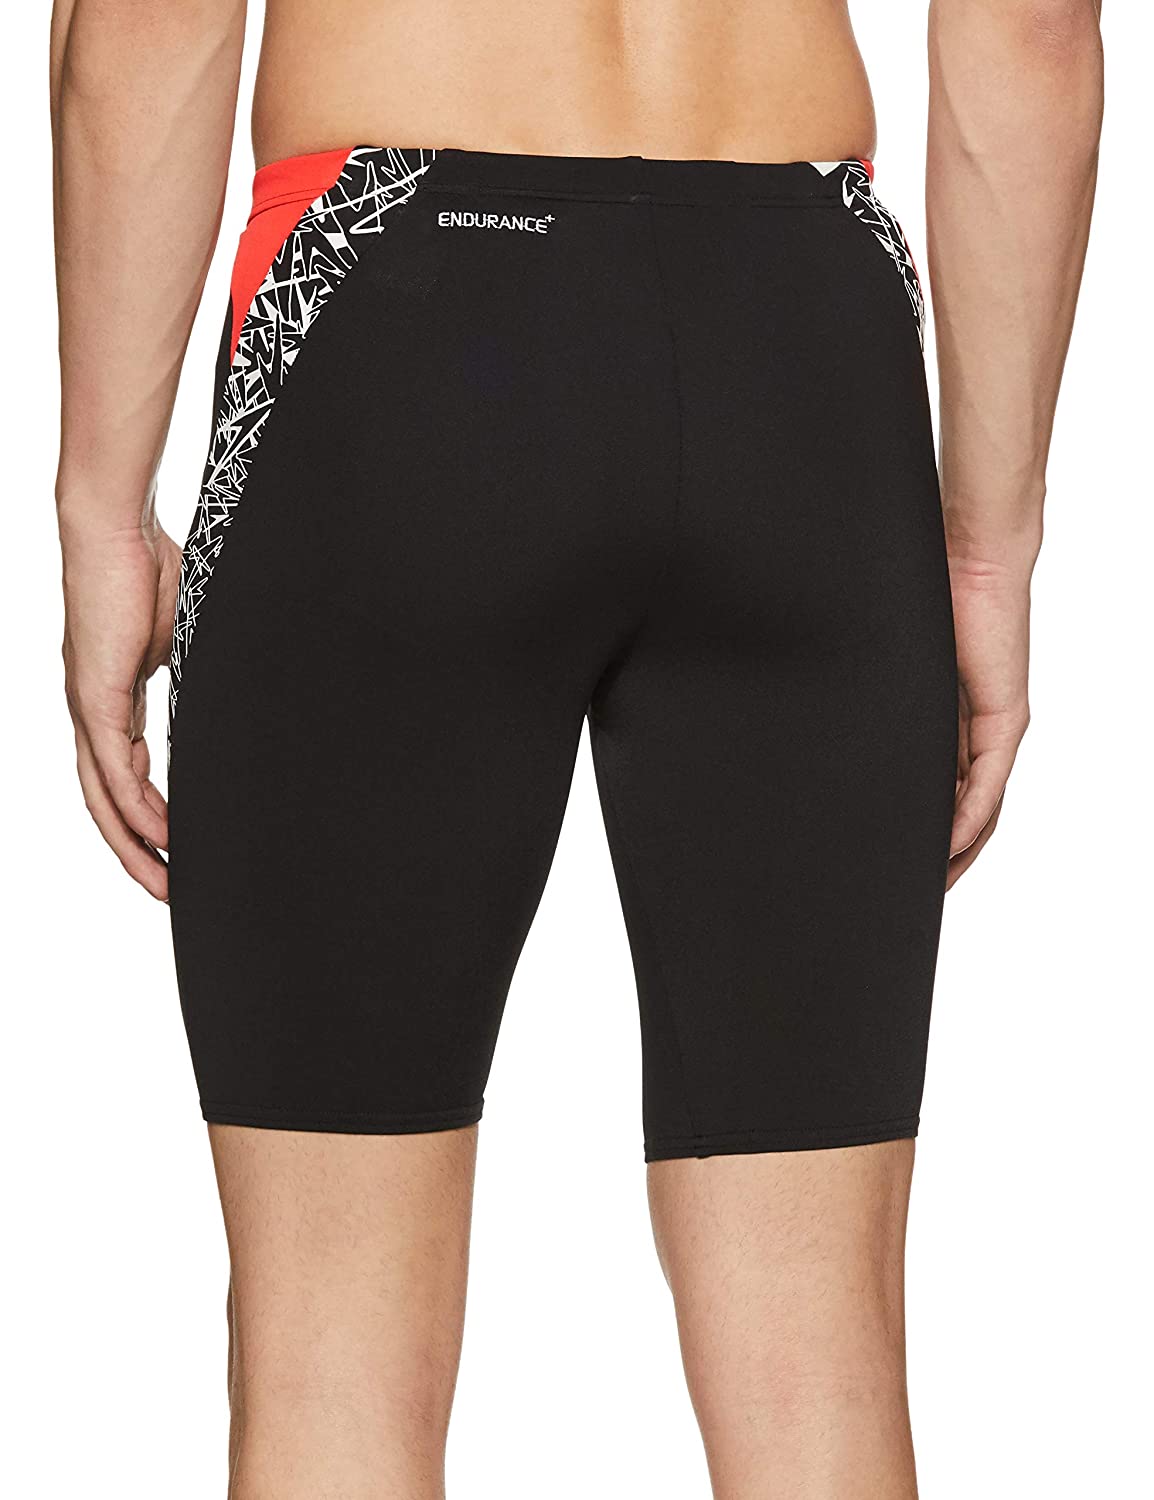 Speedo Male Swimwear Boom Splice Jammer (Black/White/Lava Red) - Best Price online Prokicksports.com